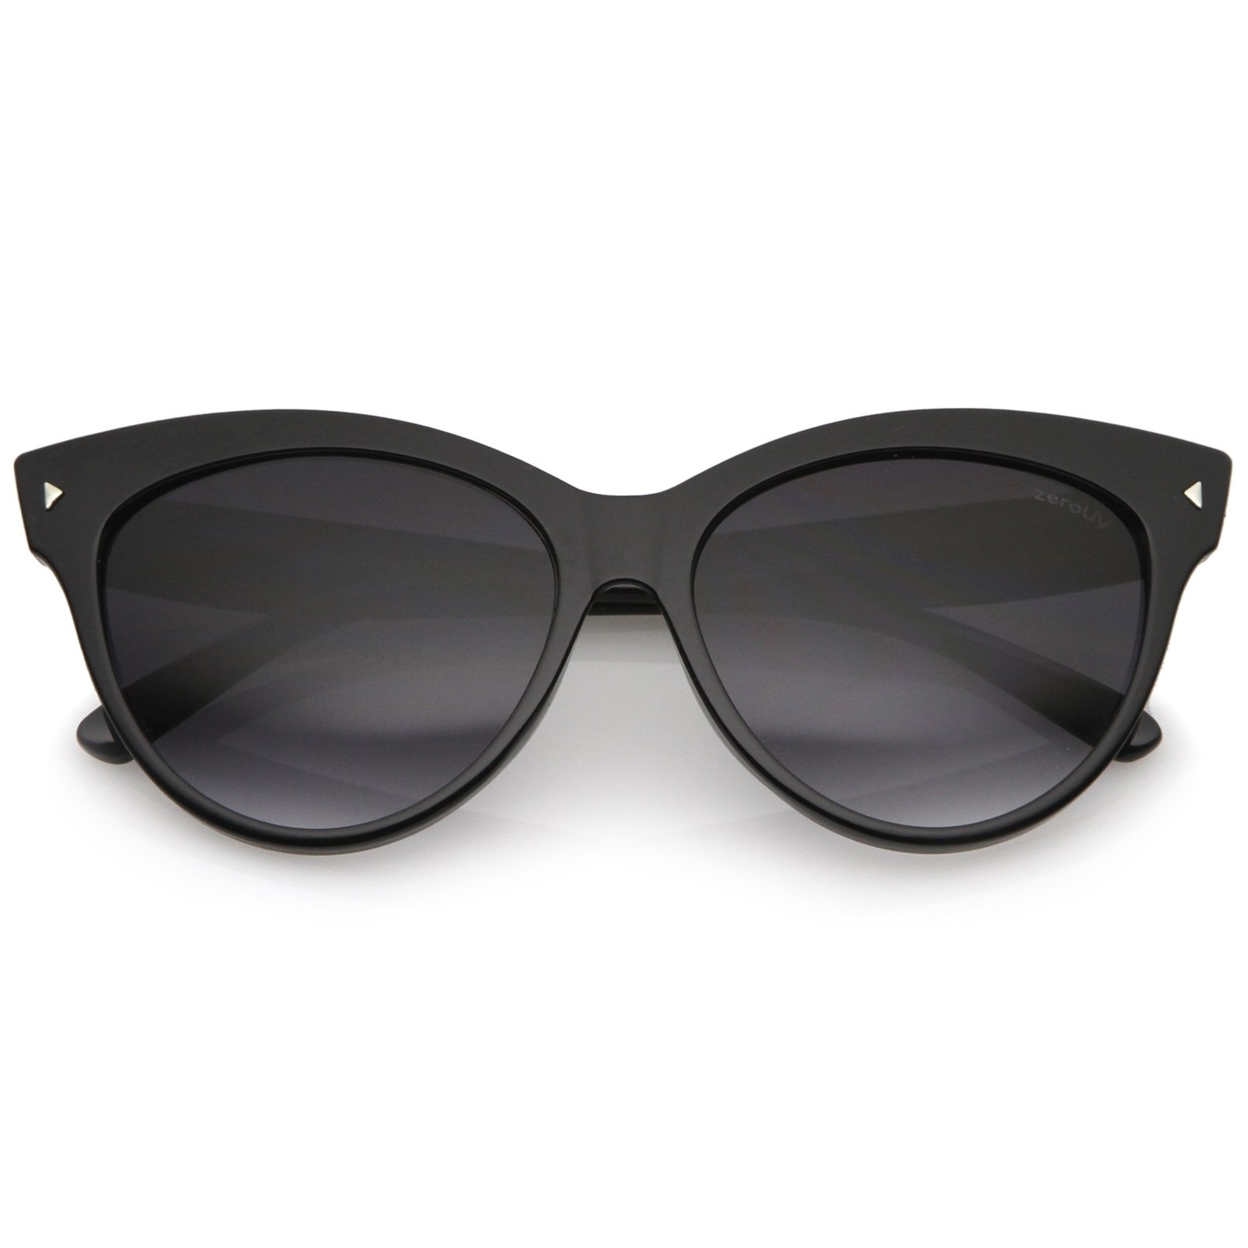 Women's Mod Oversize Horn Rimmed Cat Eye Sunglasses 52mm - Matte Black / Smoke